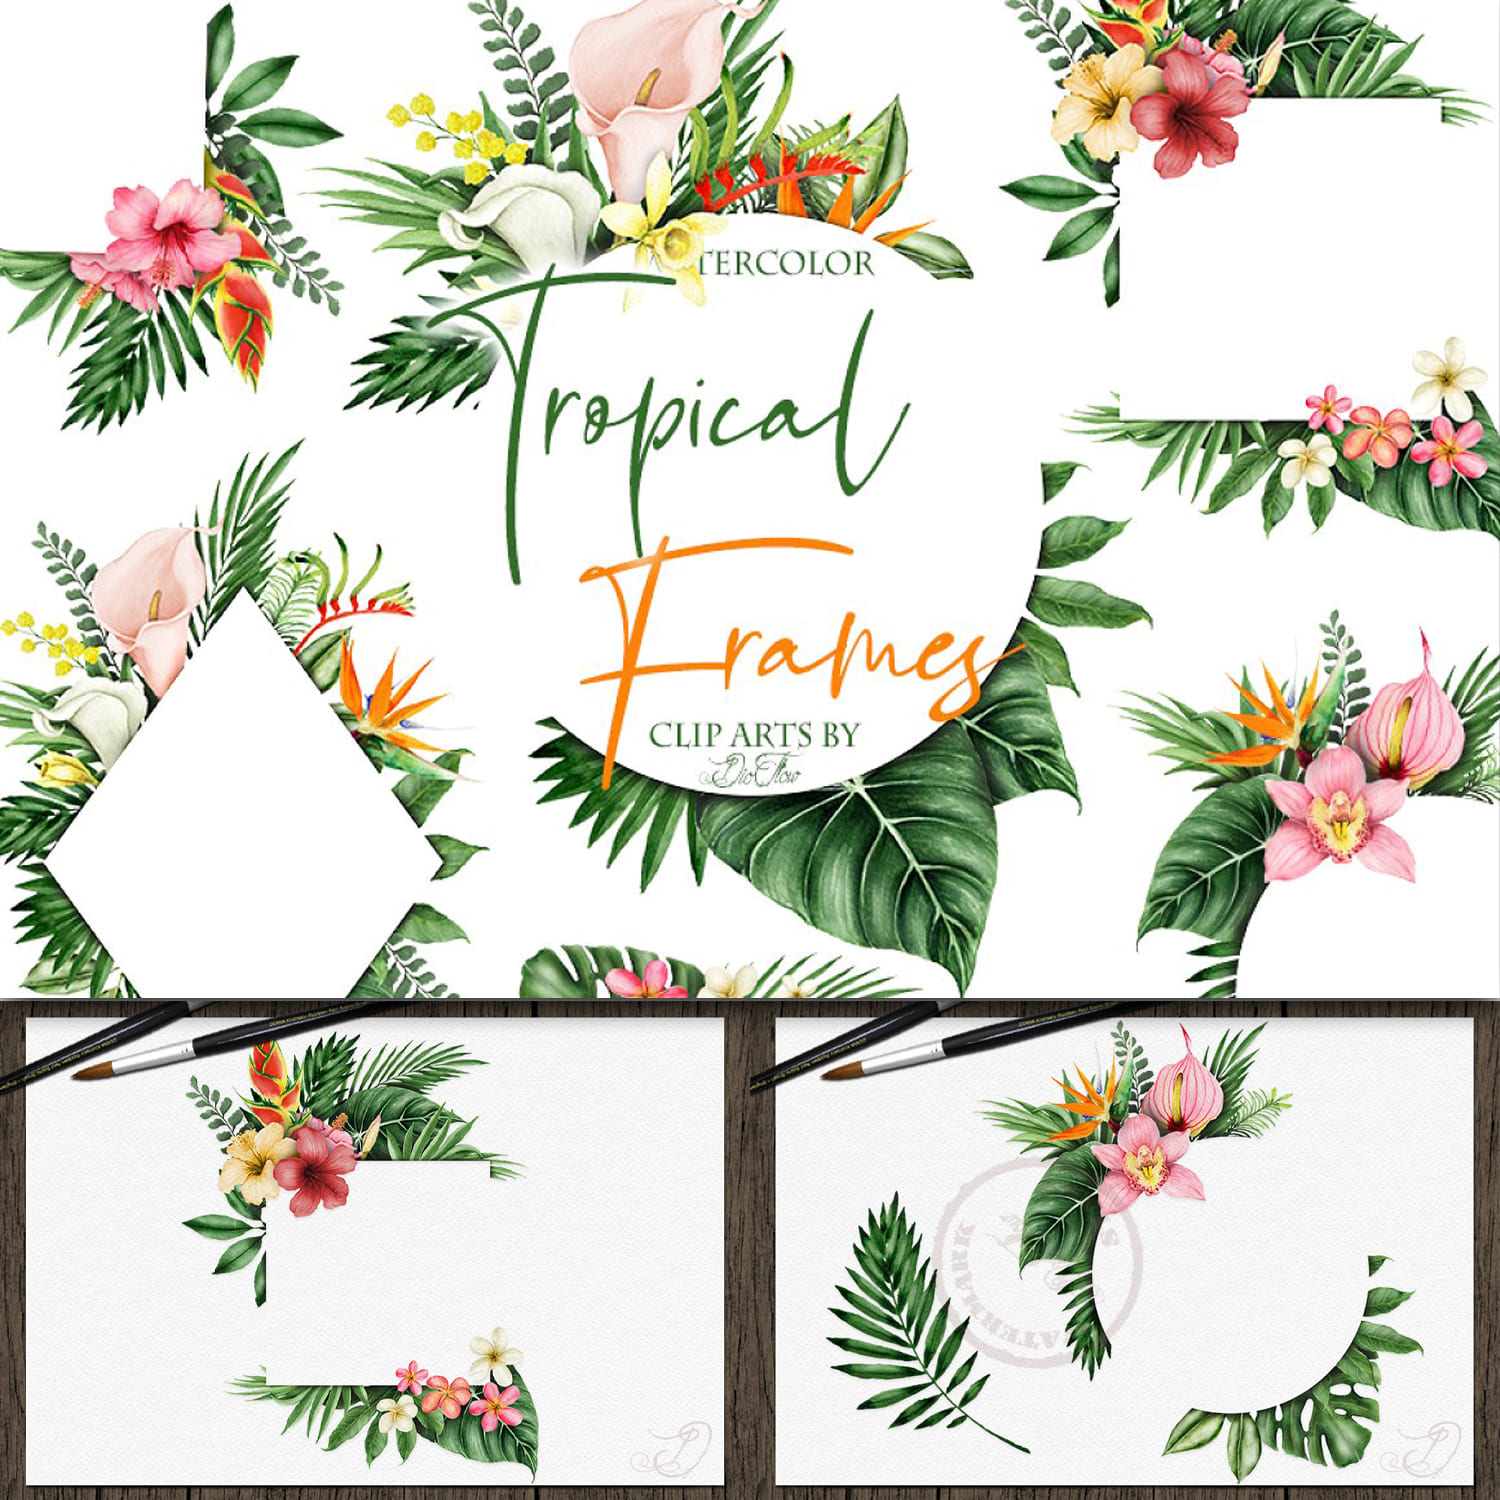 Tropical Frames Illustration cover.